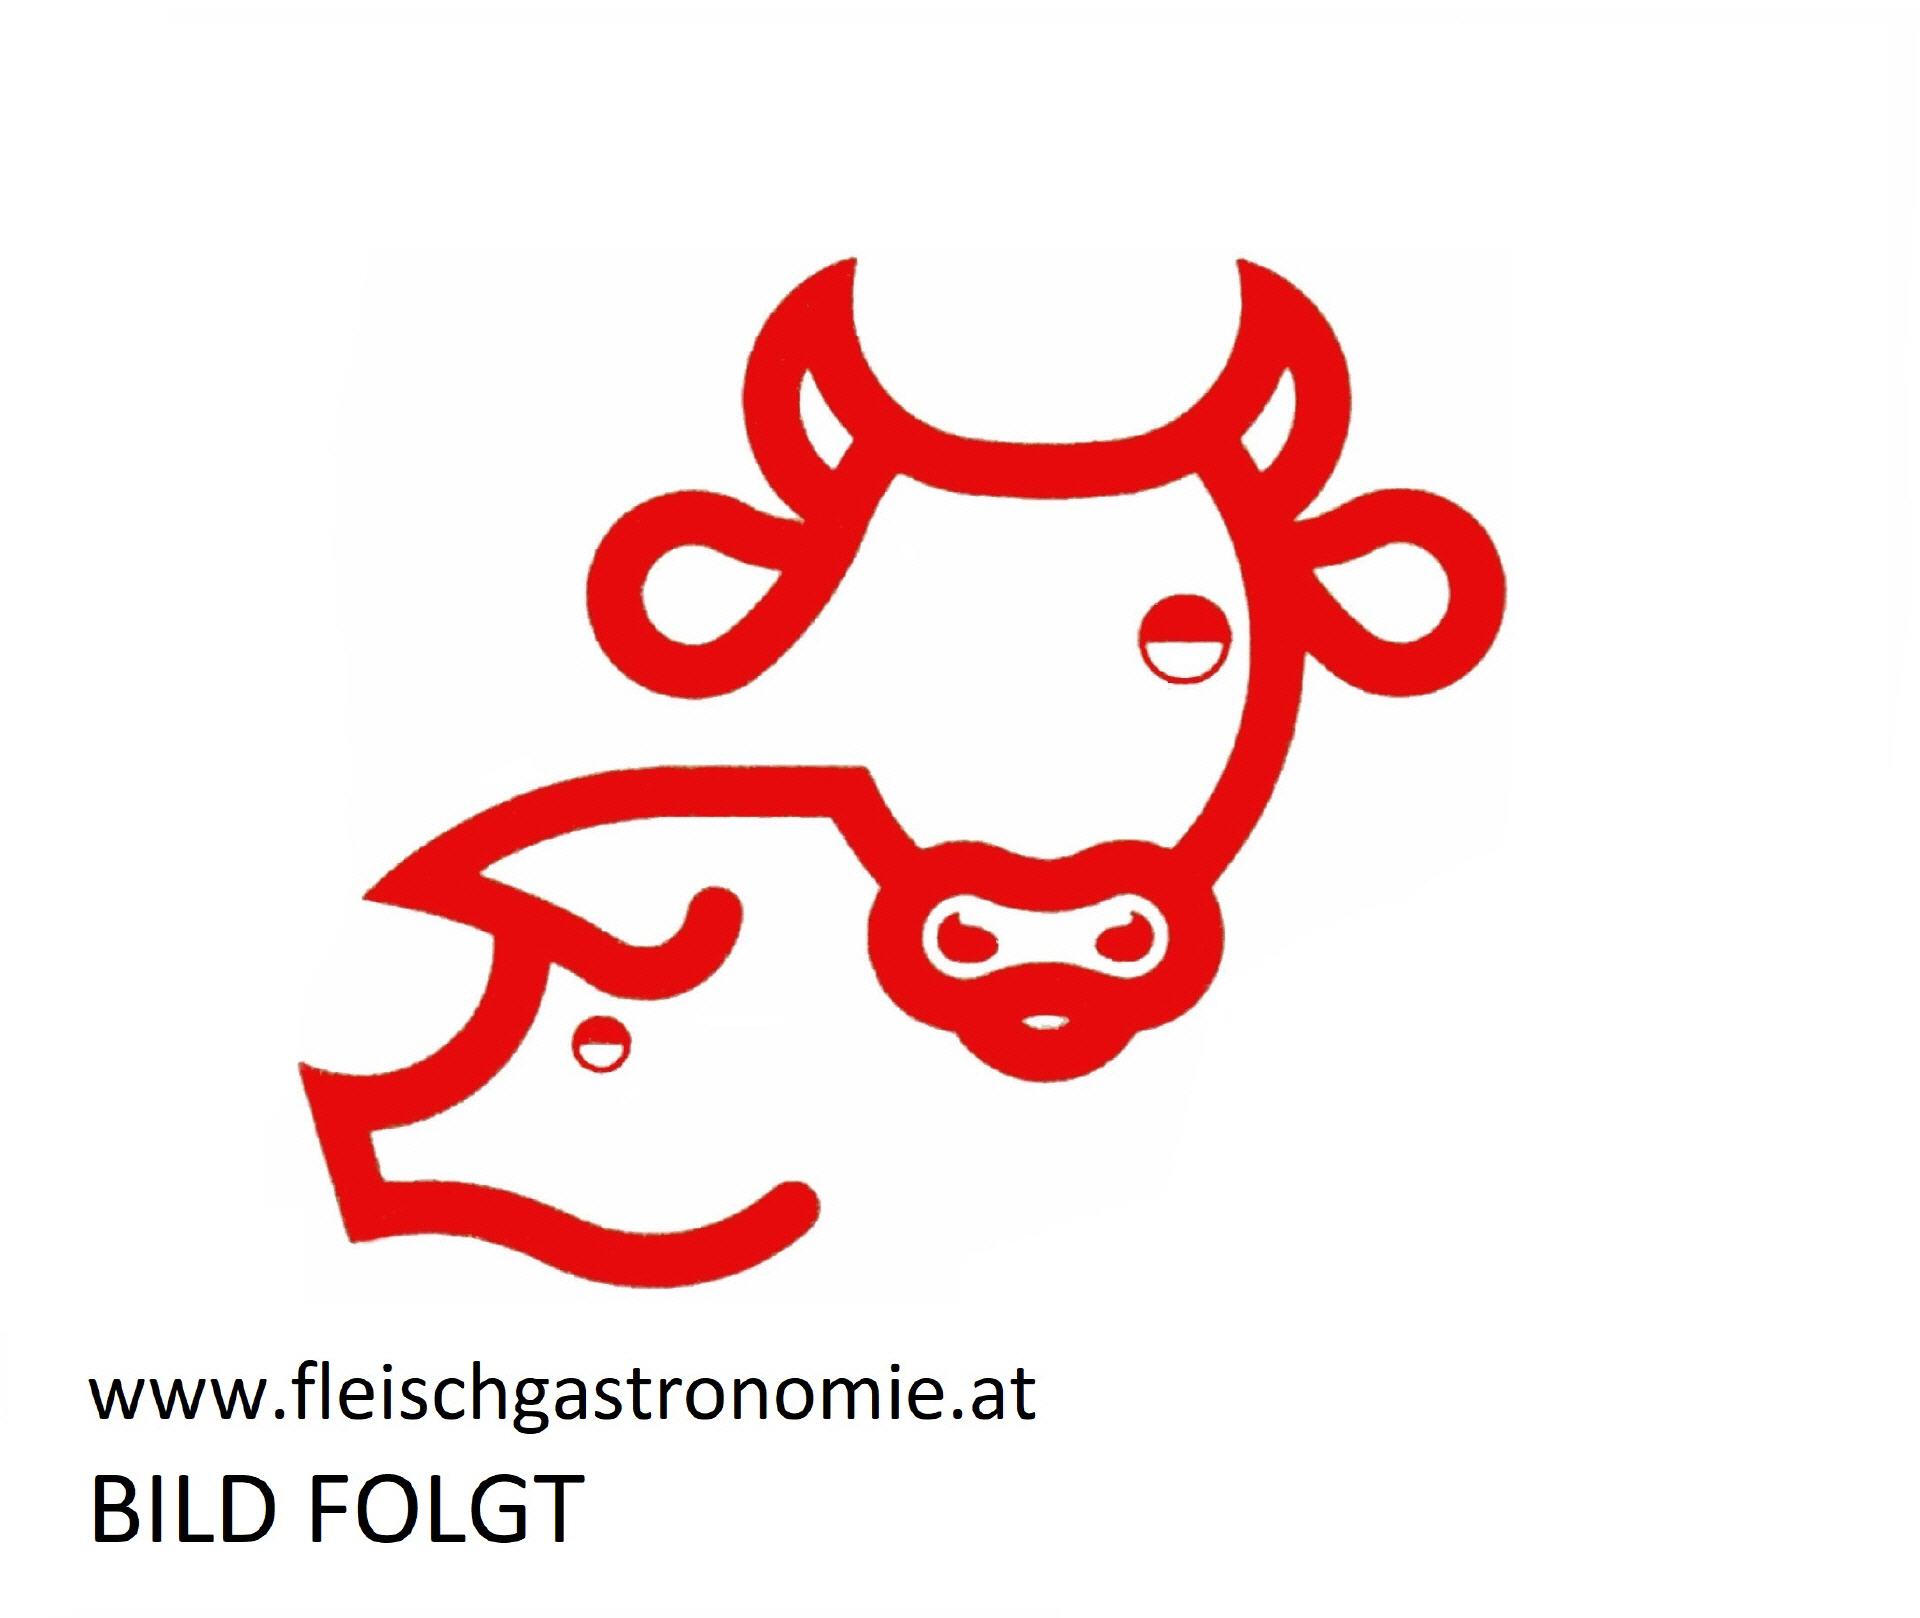 Logo Kollecker - Bild folgt